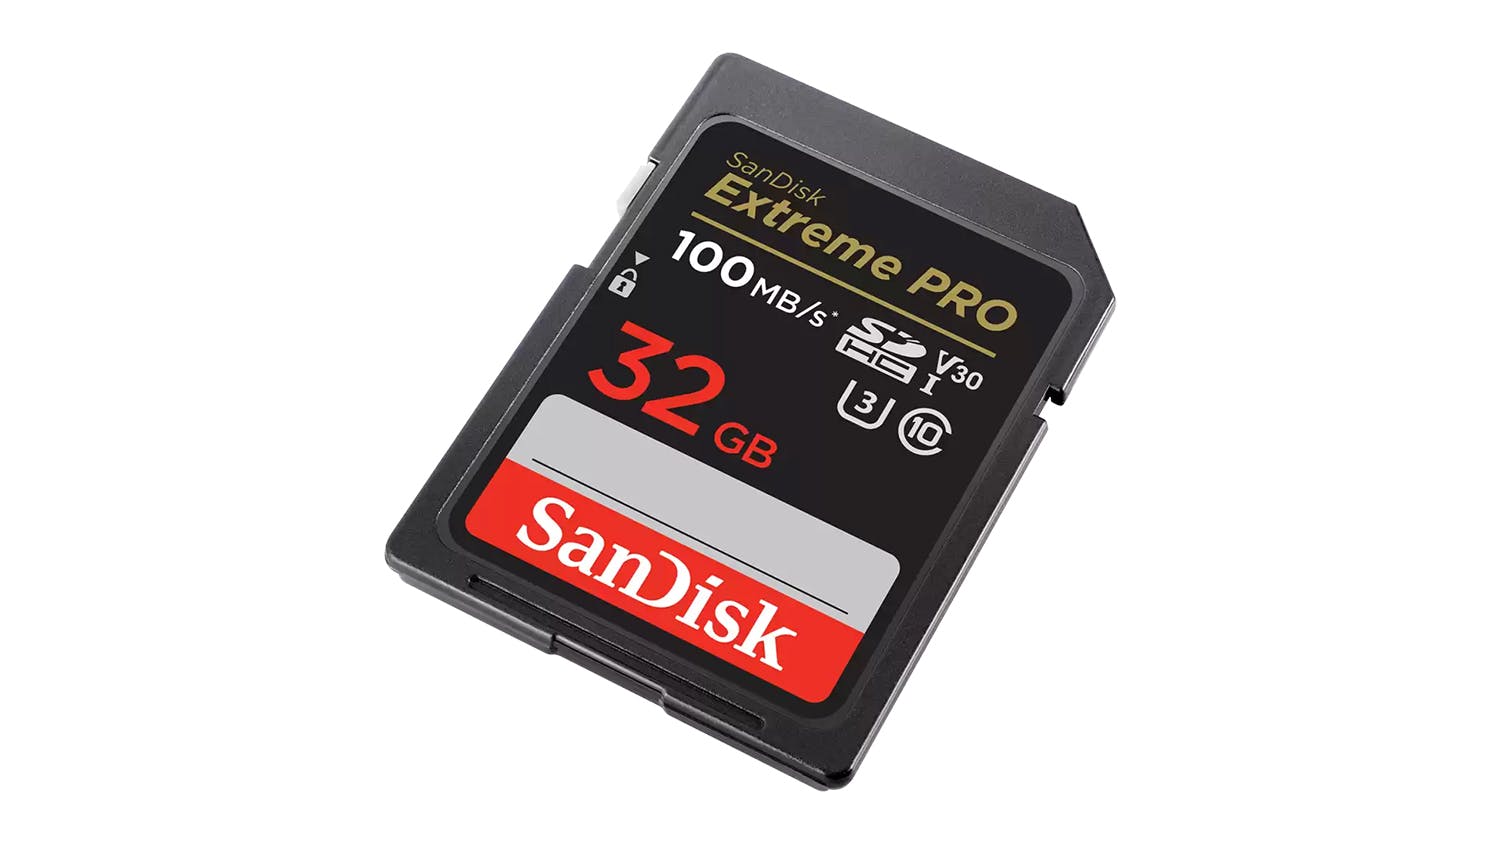 SanDisk Extreme Pro SDHC Card - 32GB